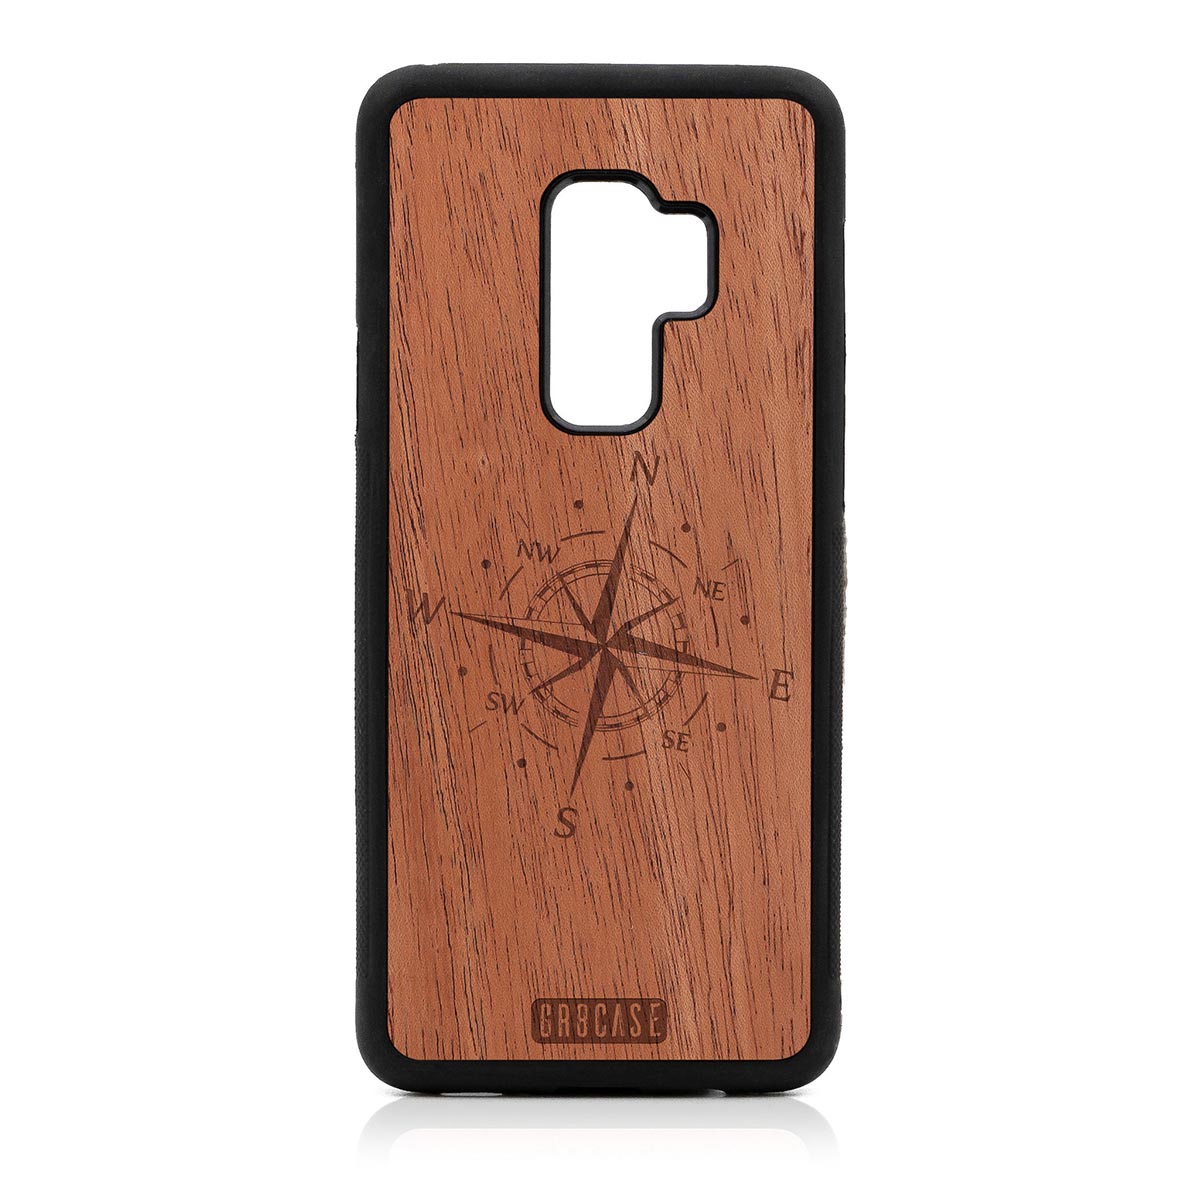 Compass Design Wood Case Samsung Galaxy S9 Plus by GR8CASE